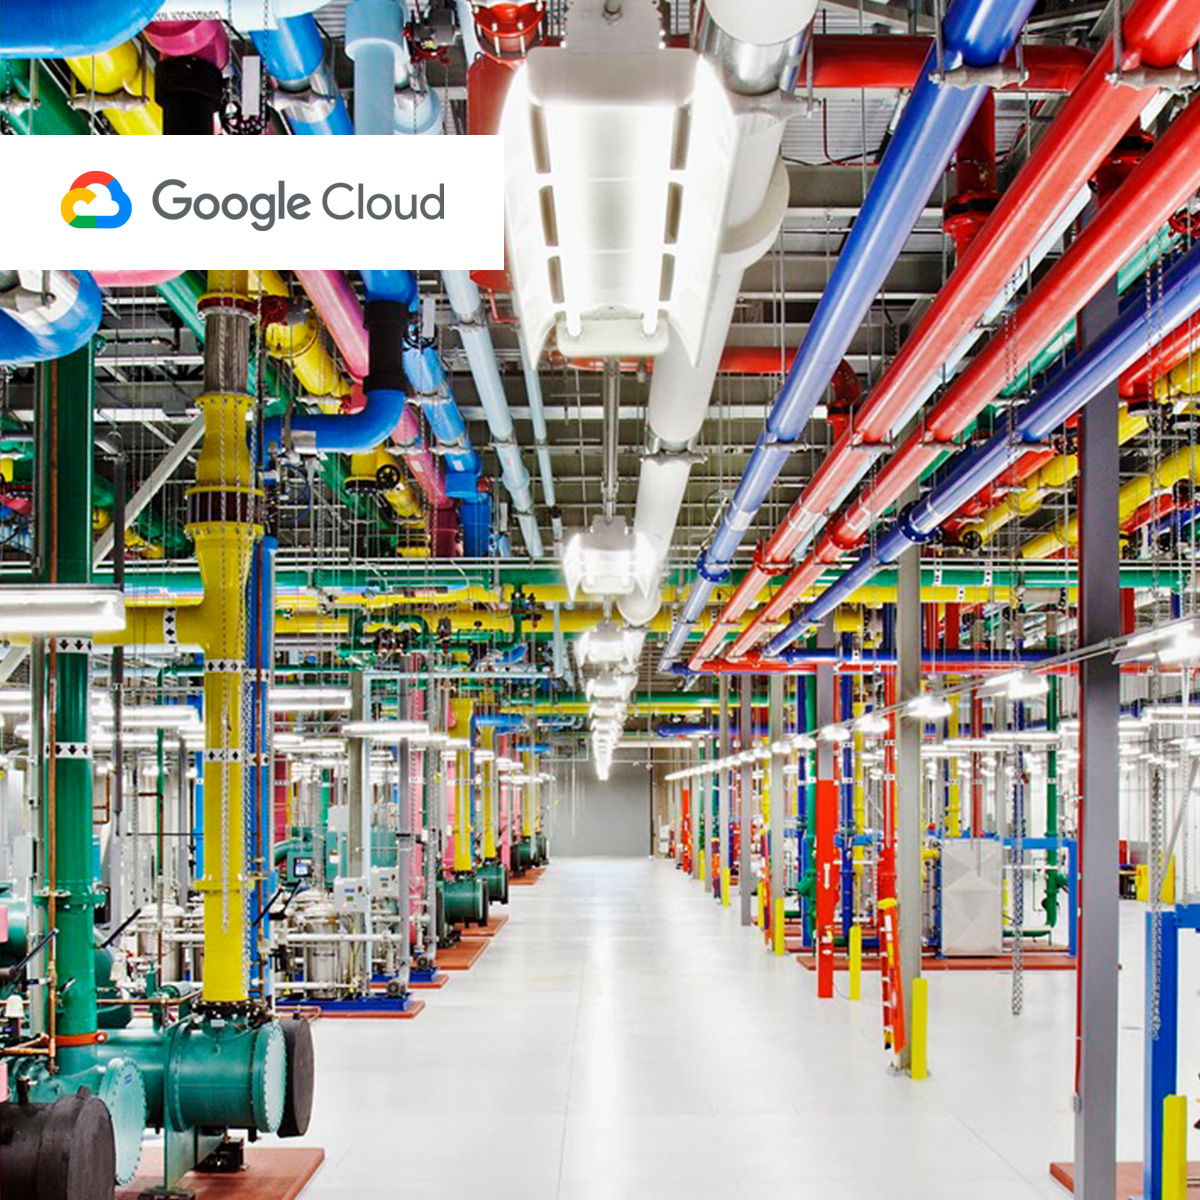 Google Cloud Fundamentals: Core Infrastructure